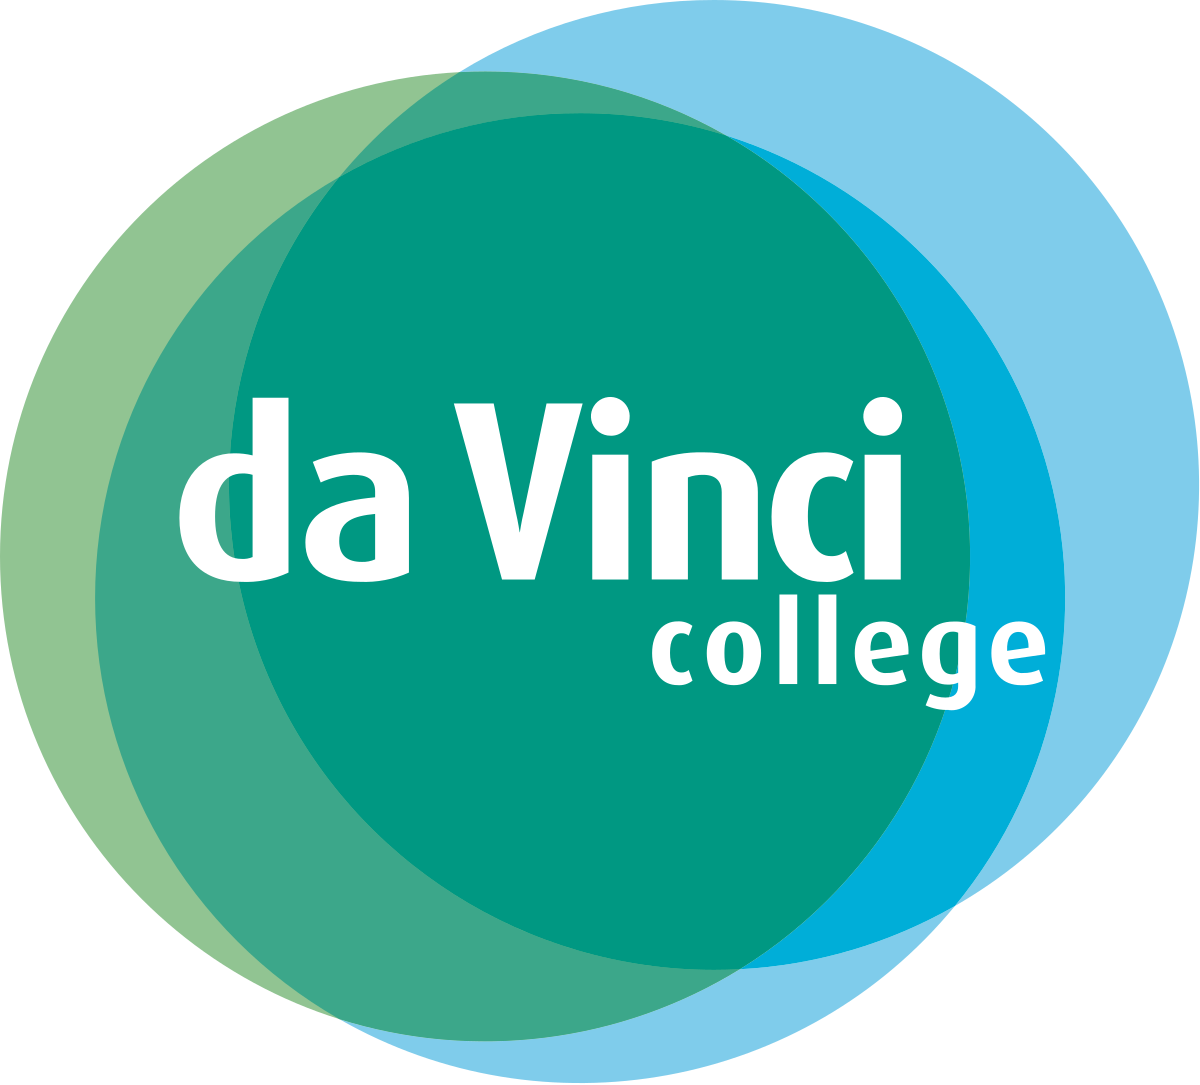 Davinci College